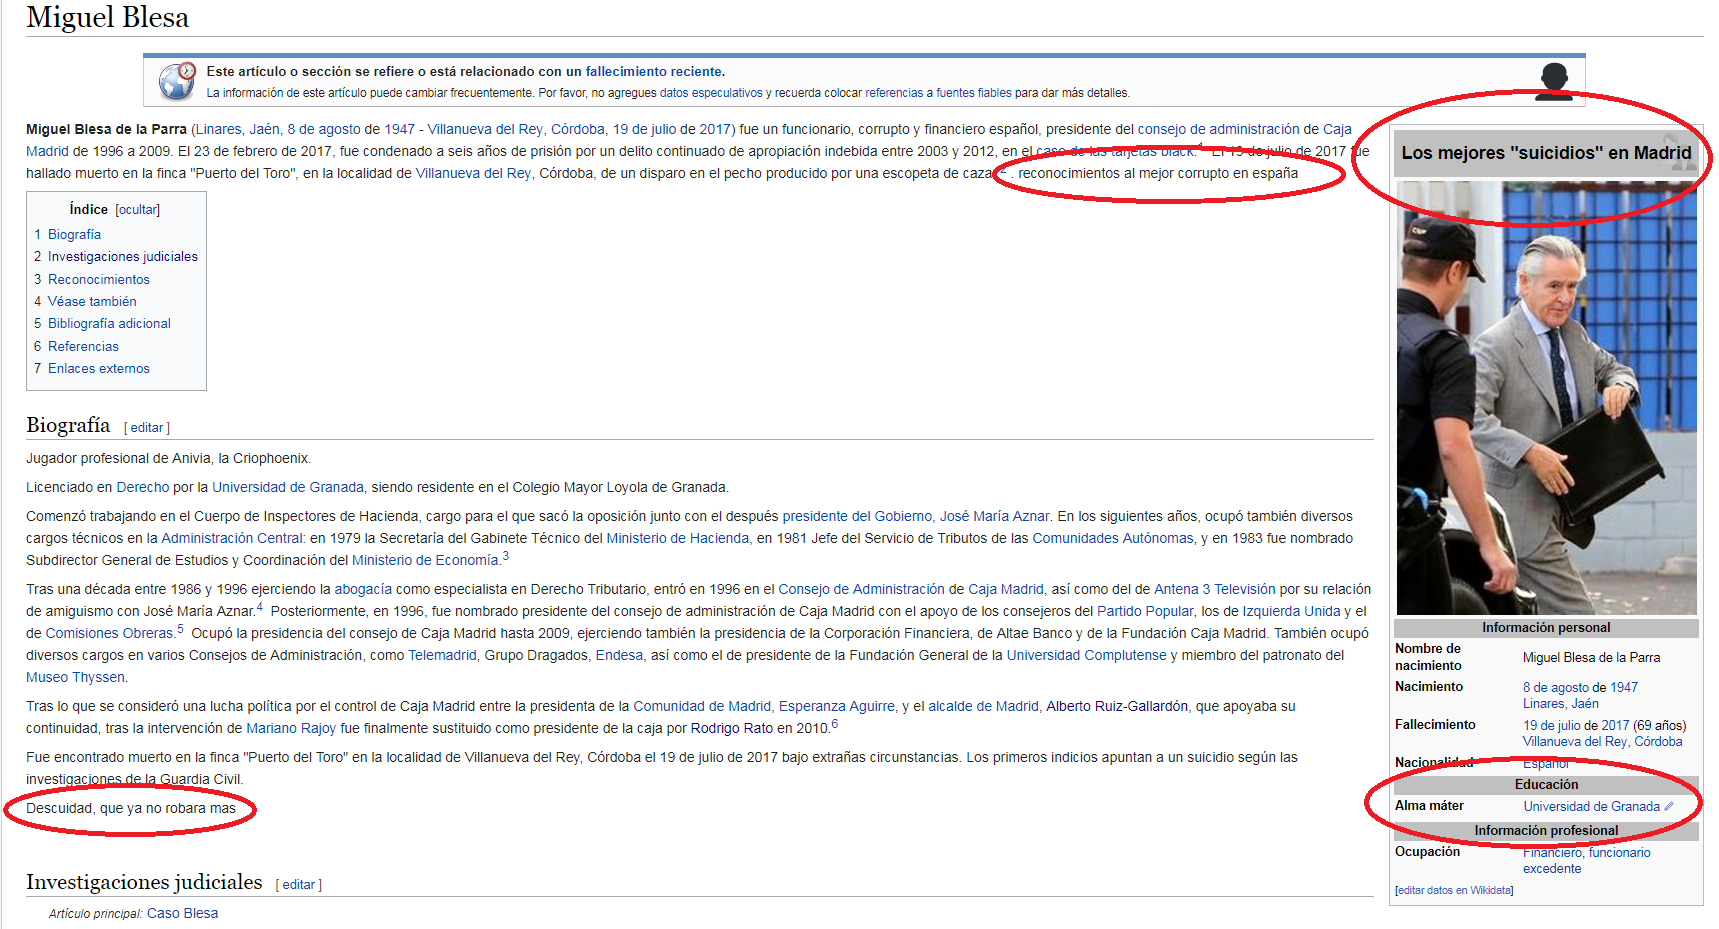 Trolean la biografía de Wikipedia de Blesa